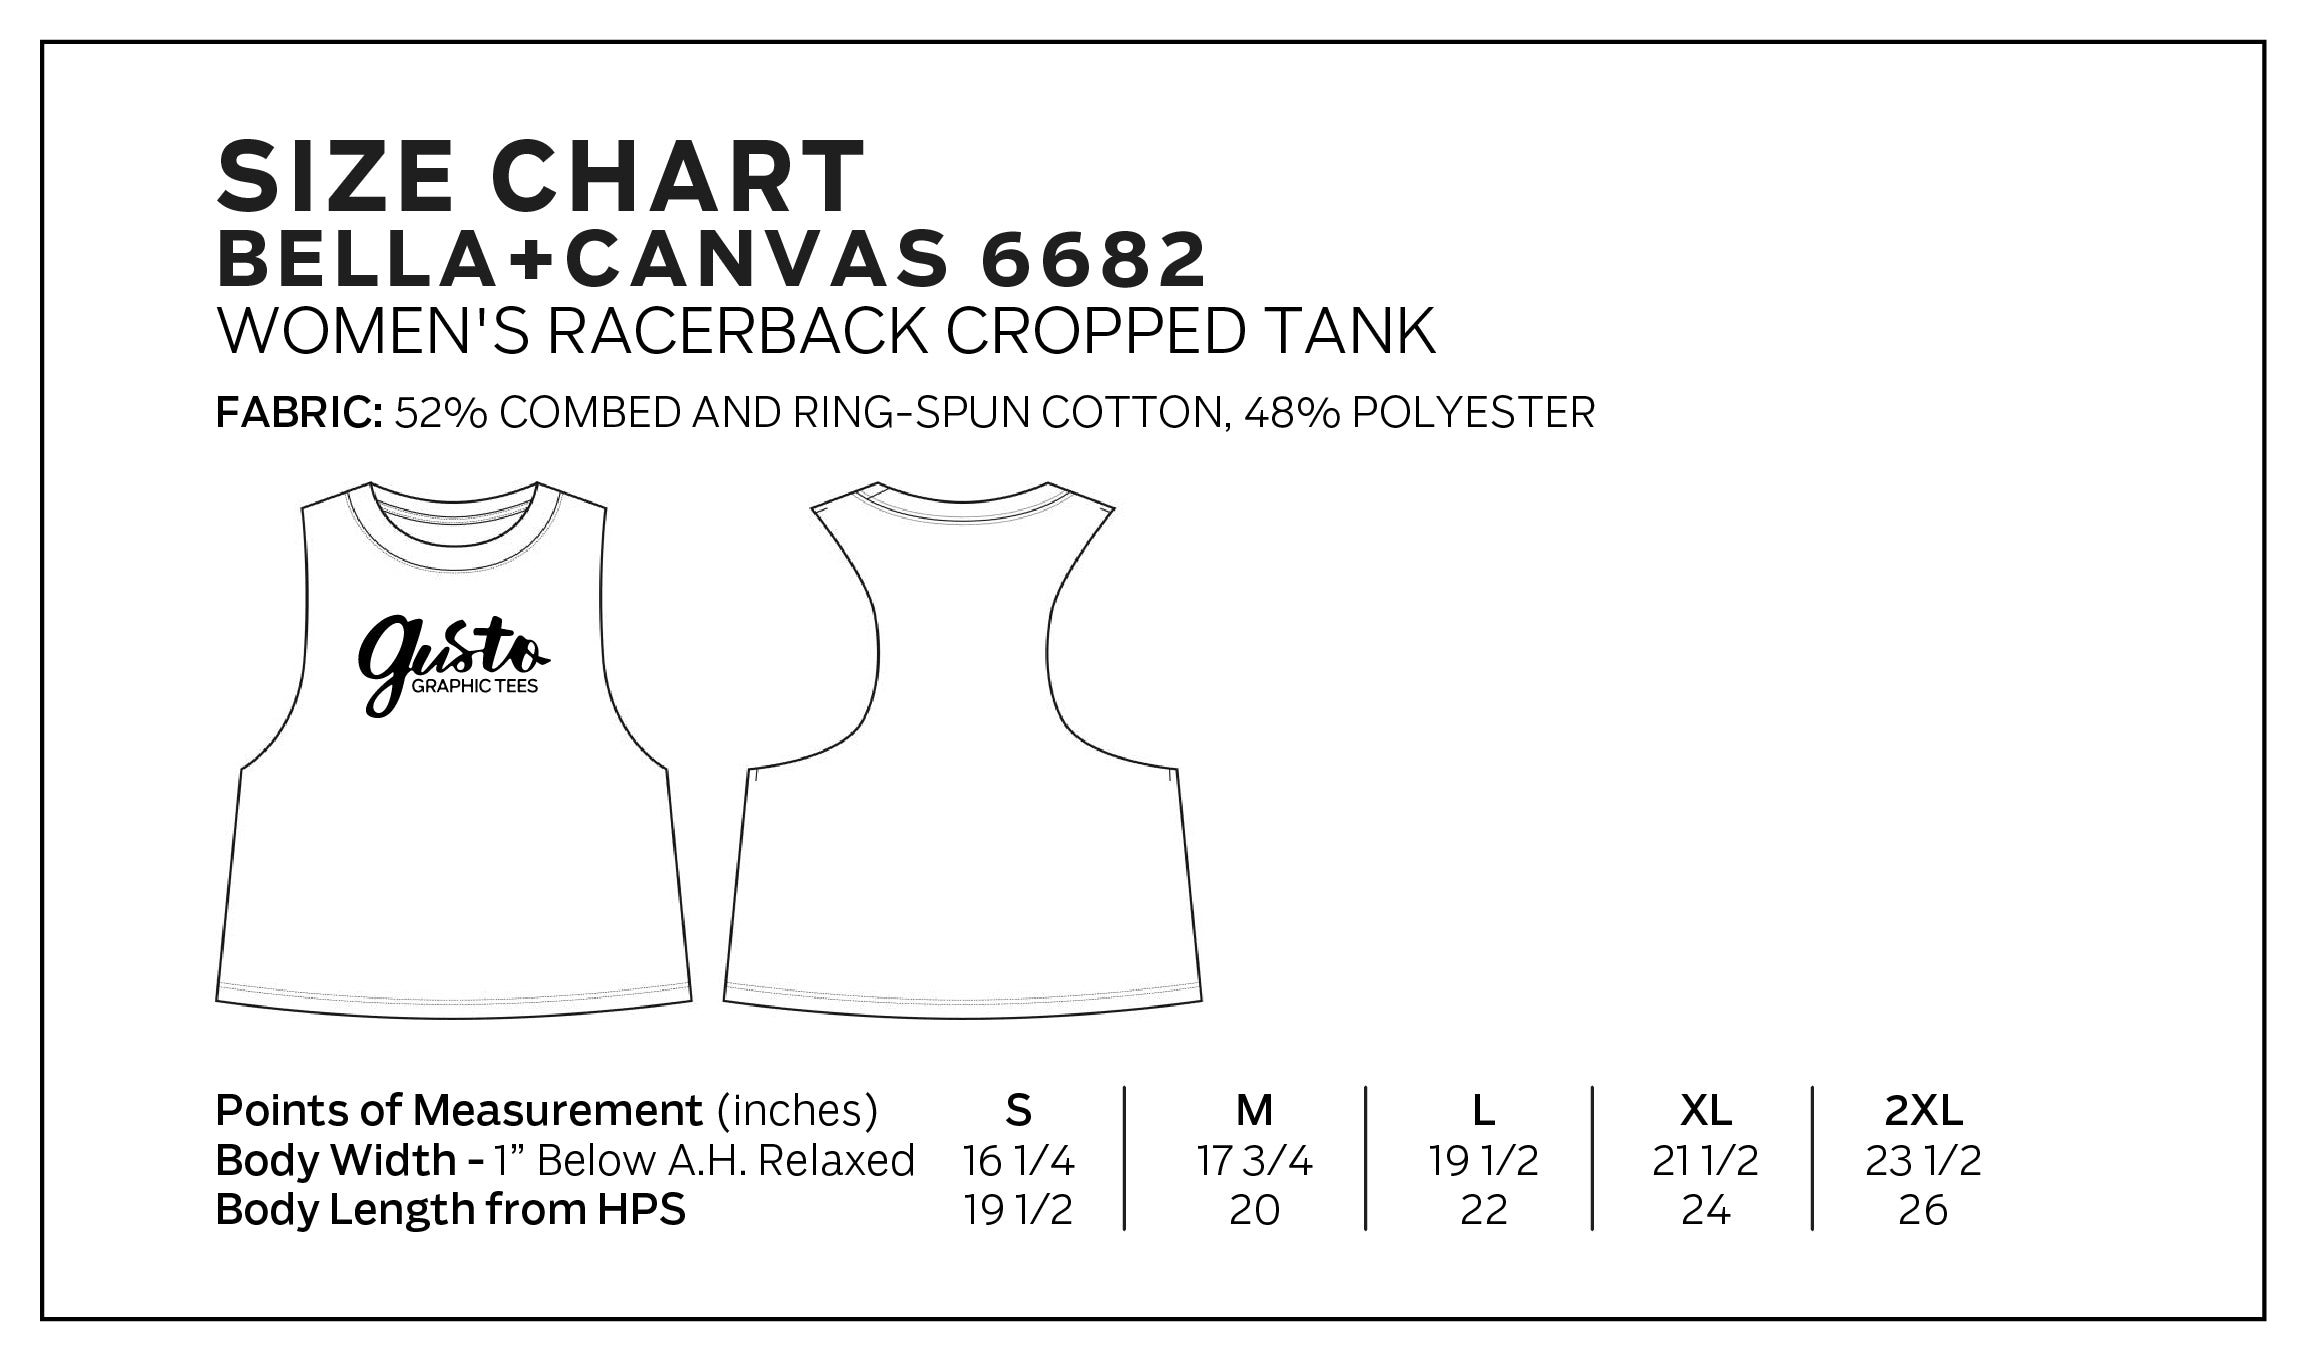 Bella+Canvas 6682 Size Chart, Women's Racerback cropped tank